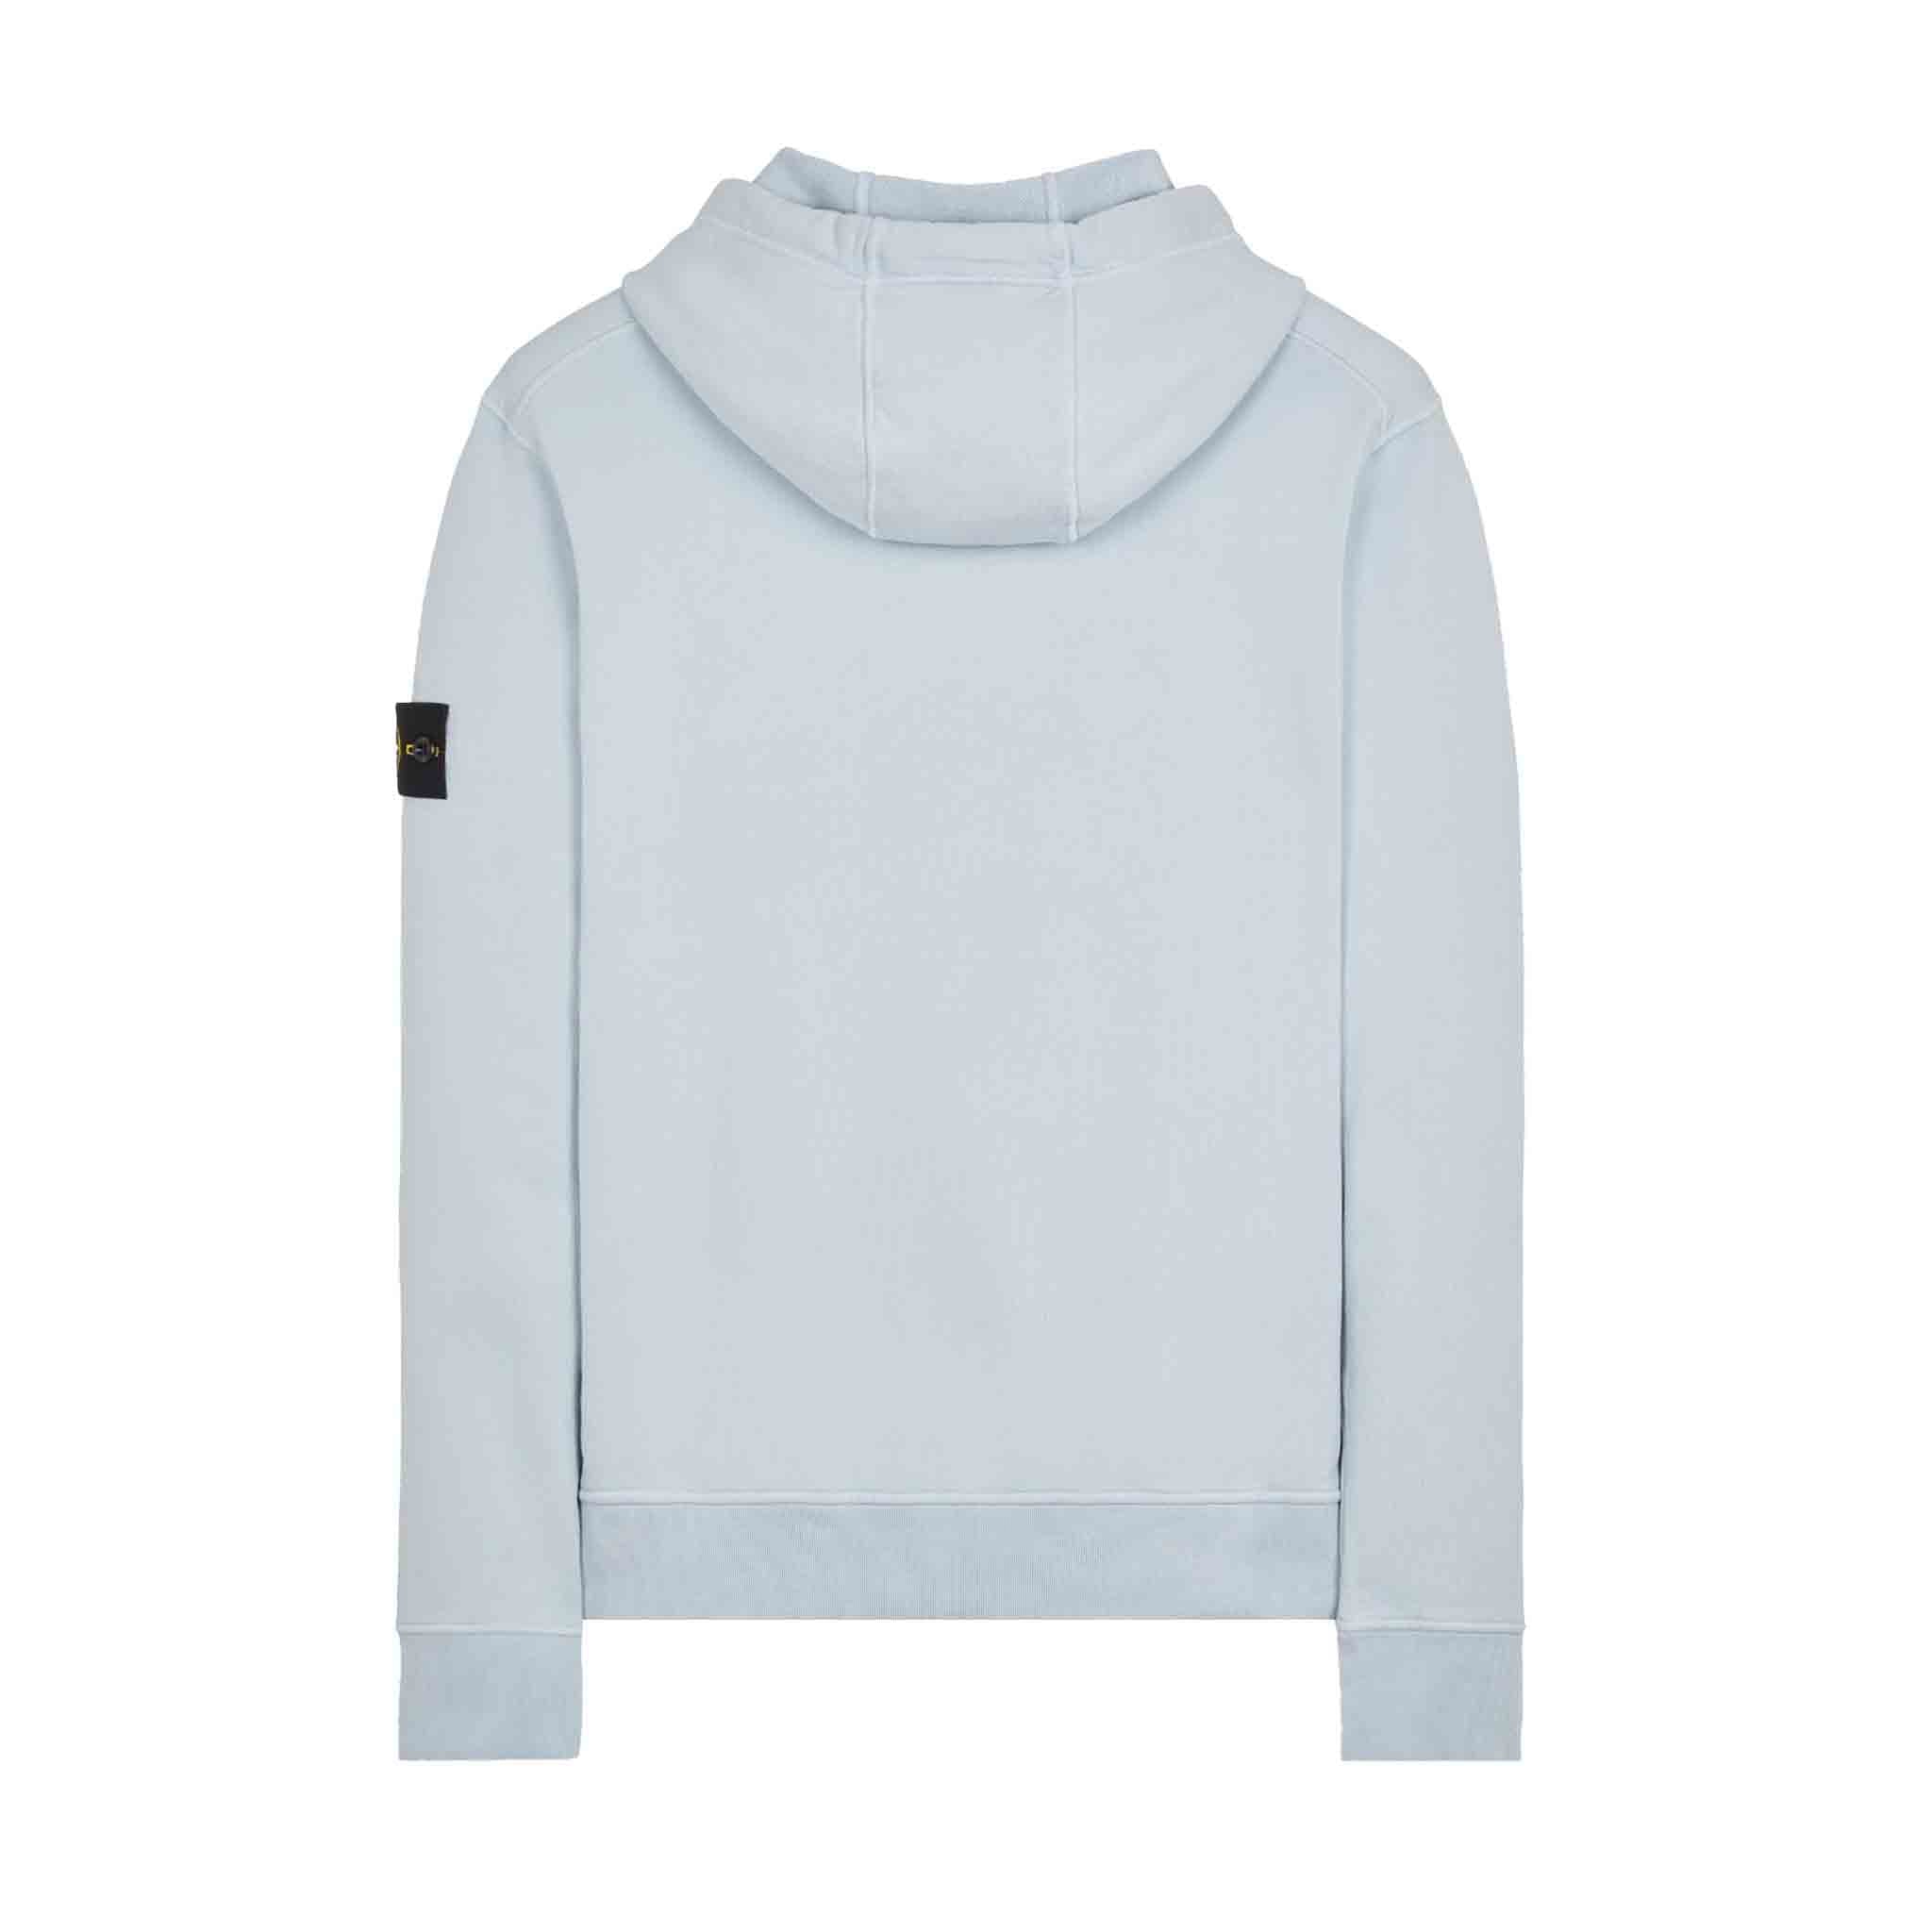 Stone Island Garment Dyed Hooded Sweatshirt in Sky Blue